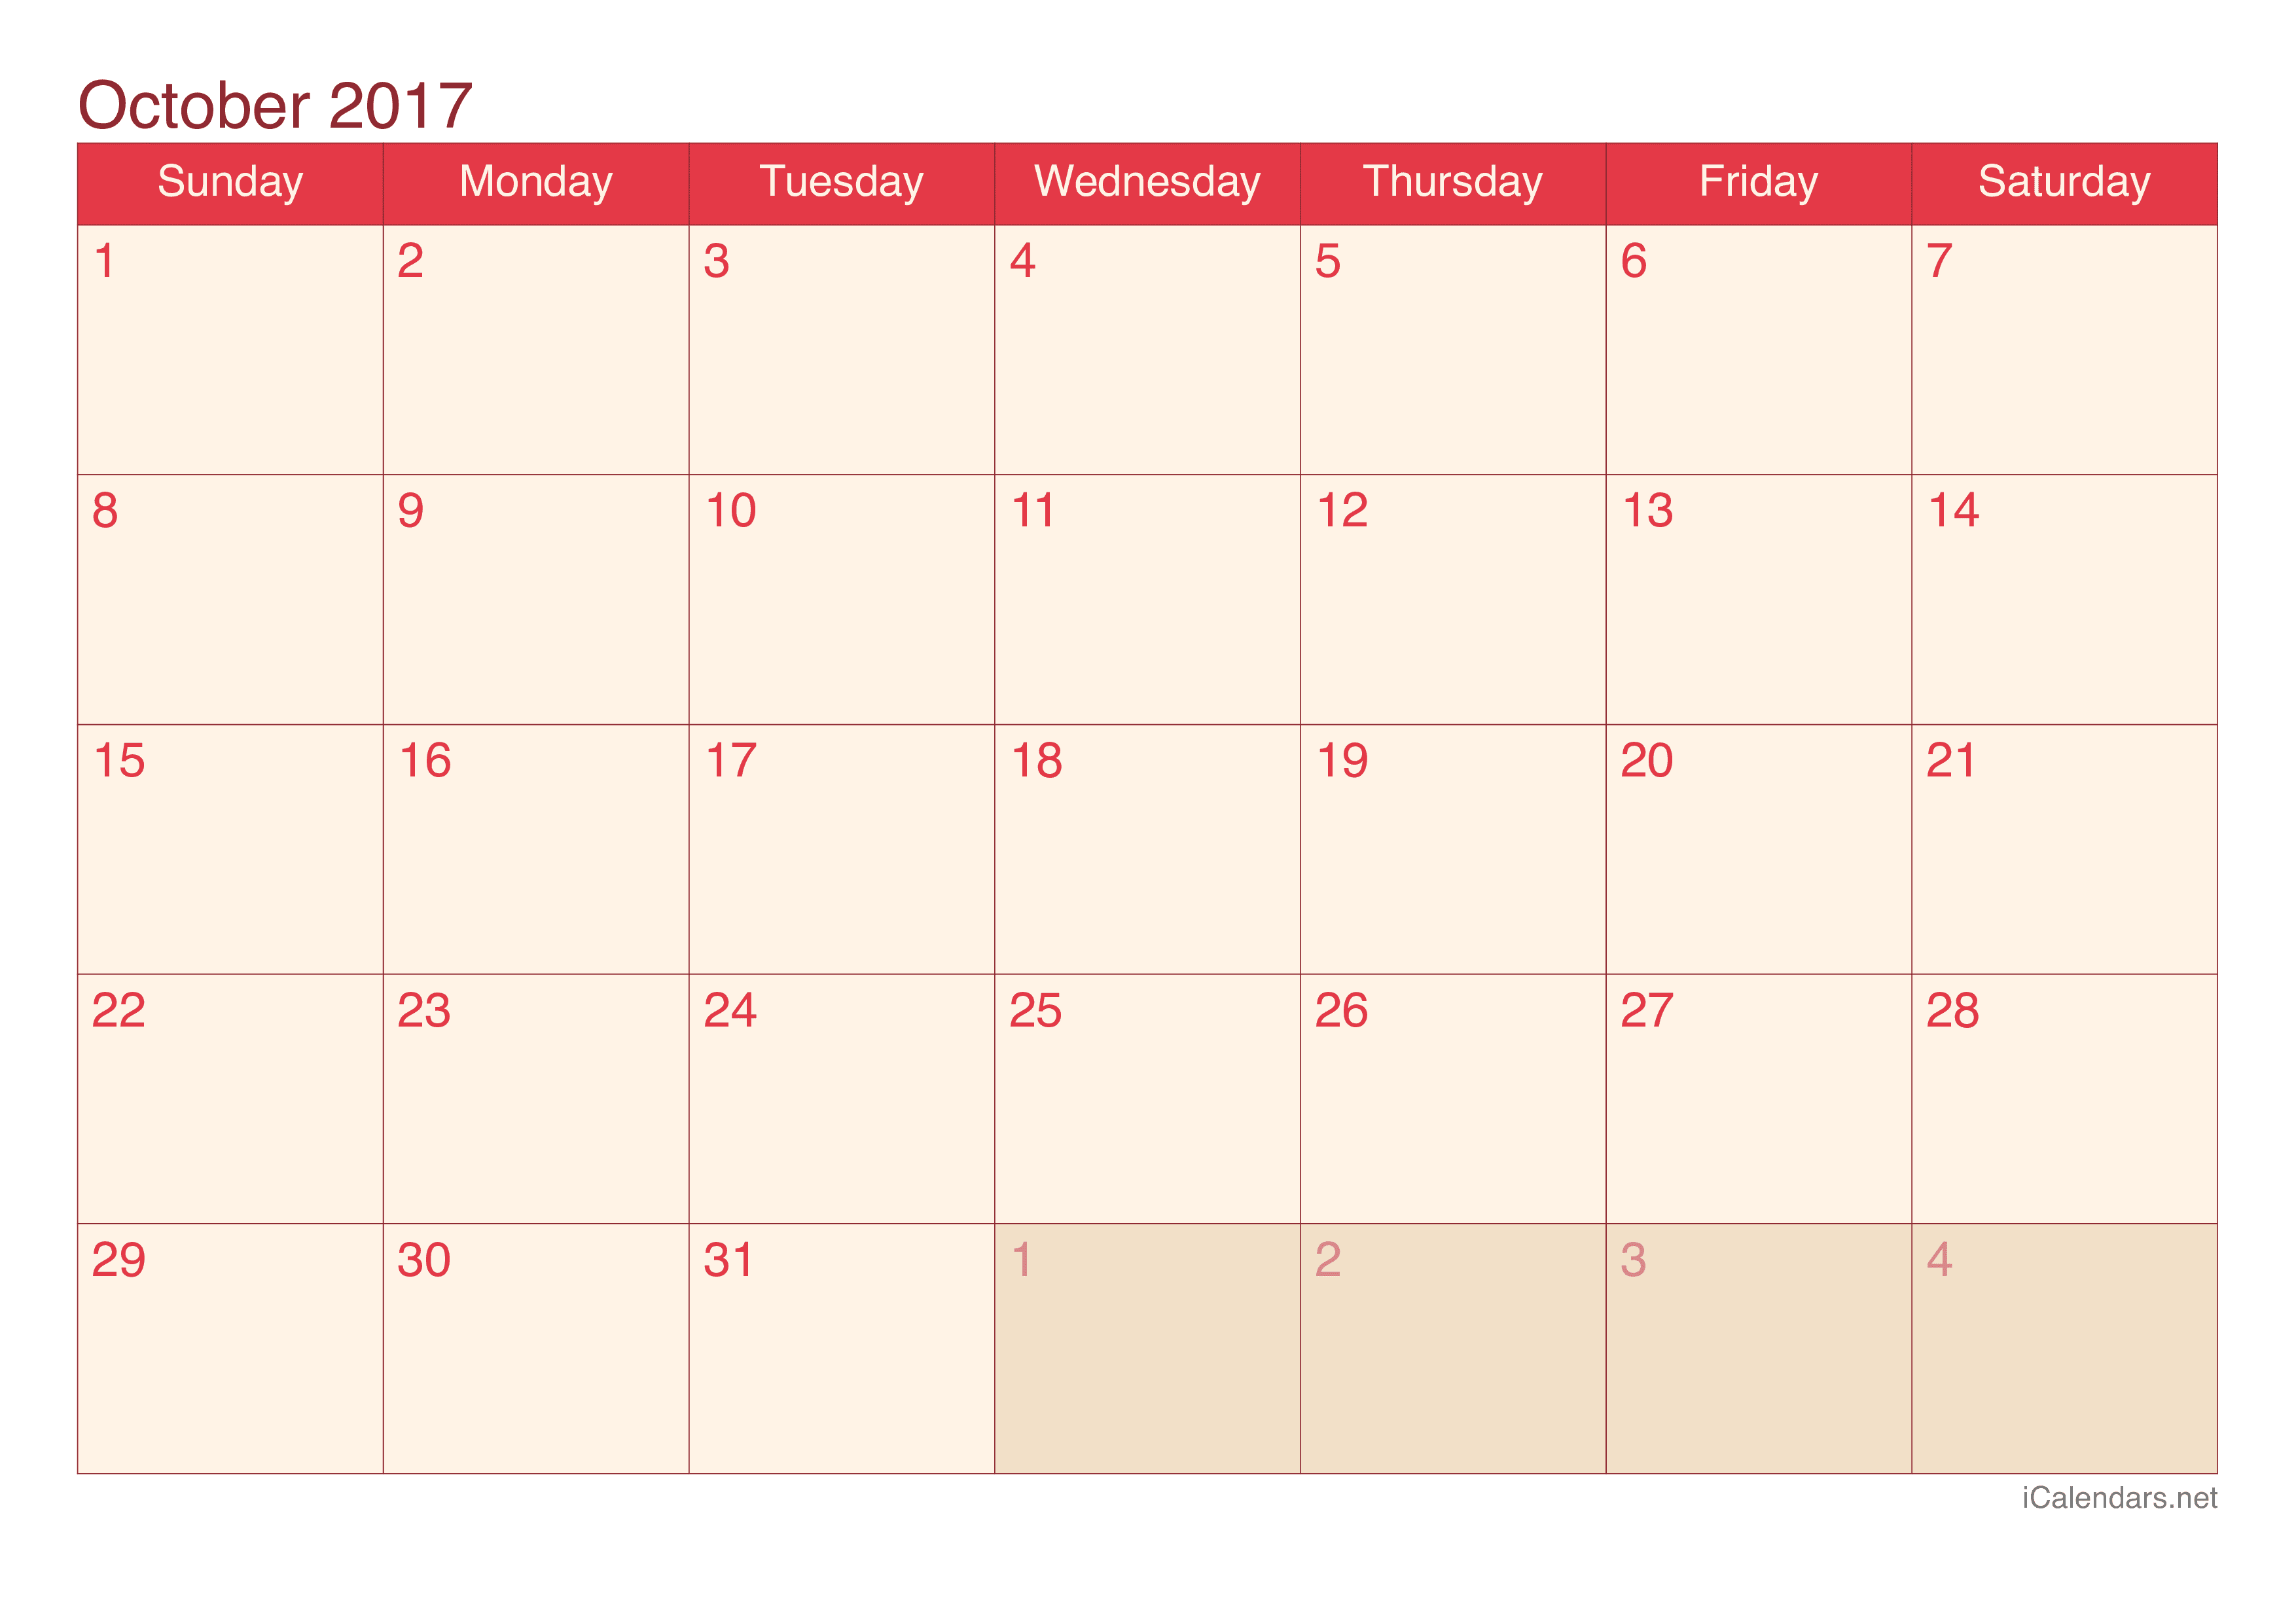 2017 October Calendar - Cherry